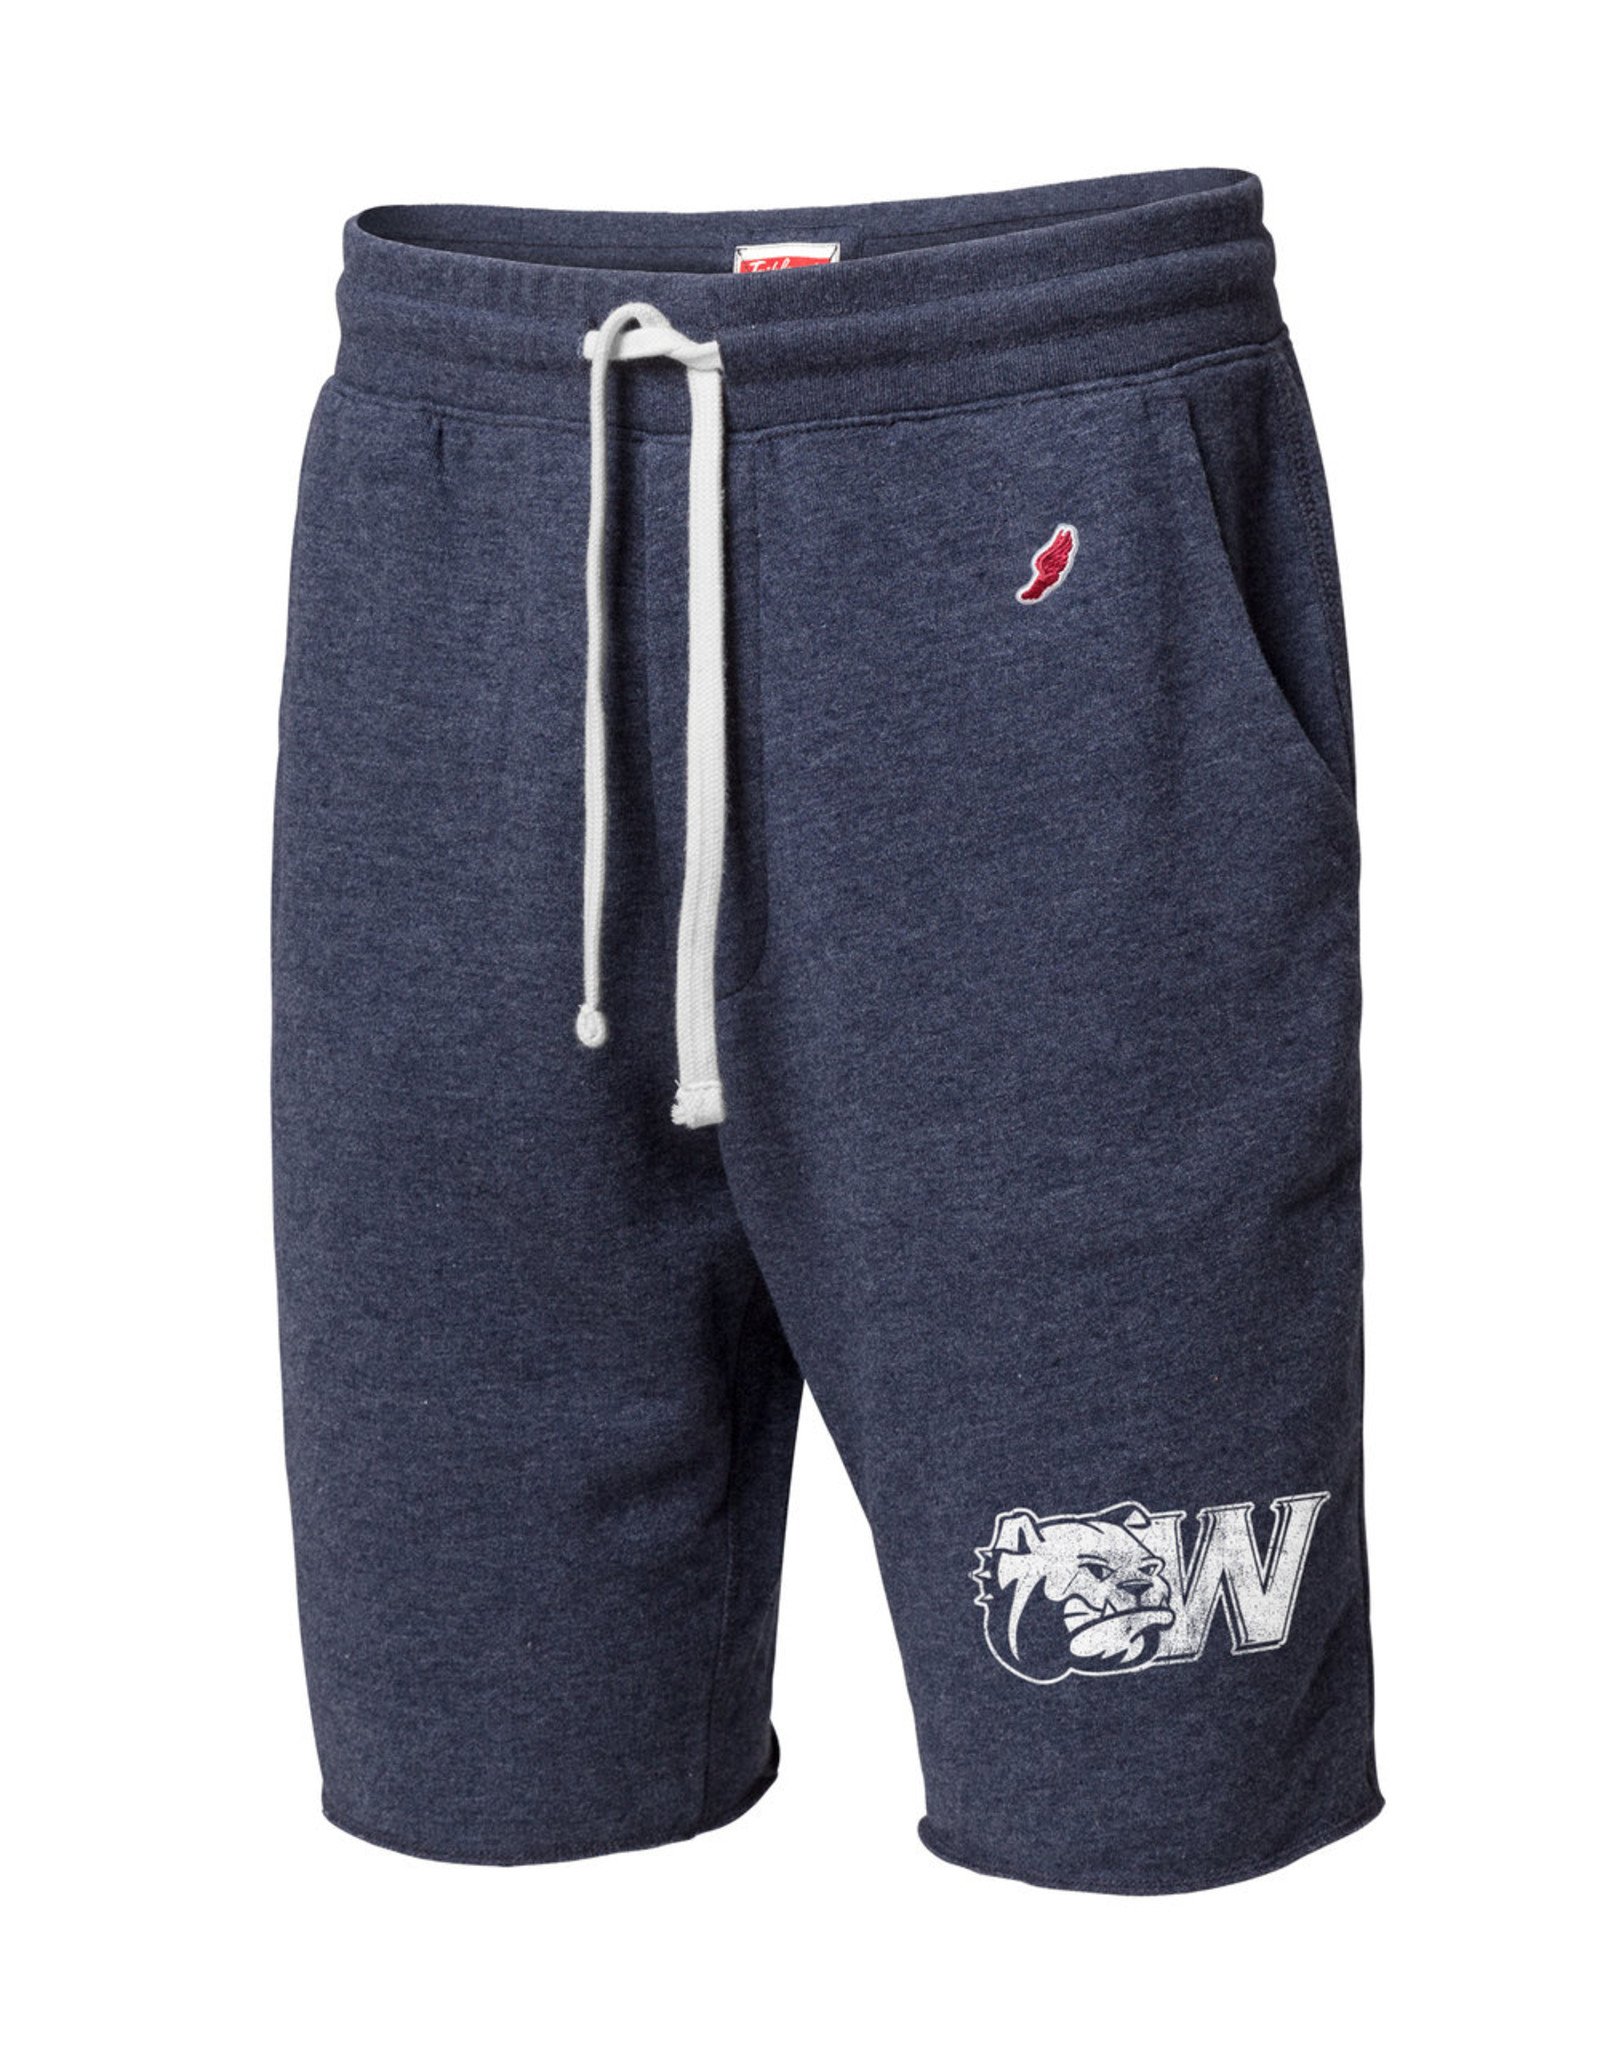 Navy Sweatpant Shorts